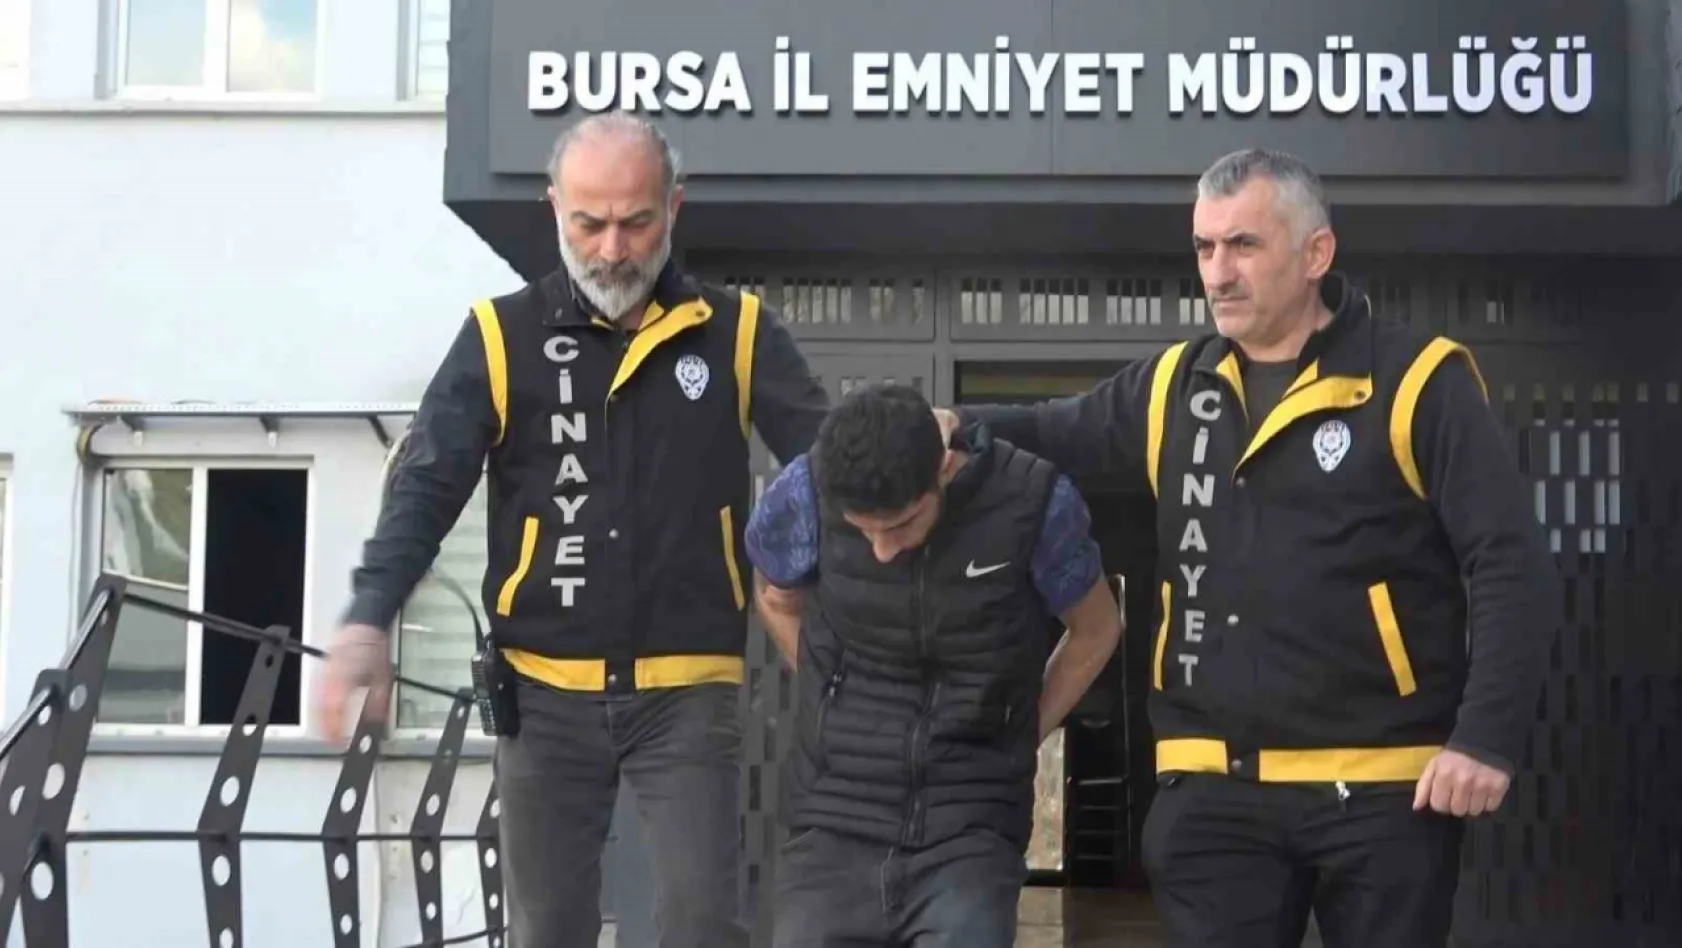 Bursa'da ailesini katletti.